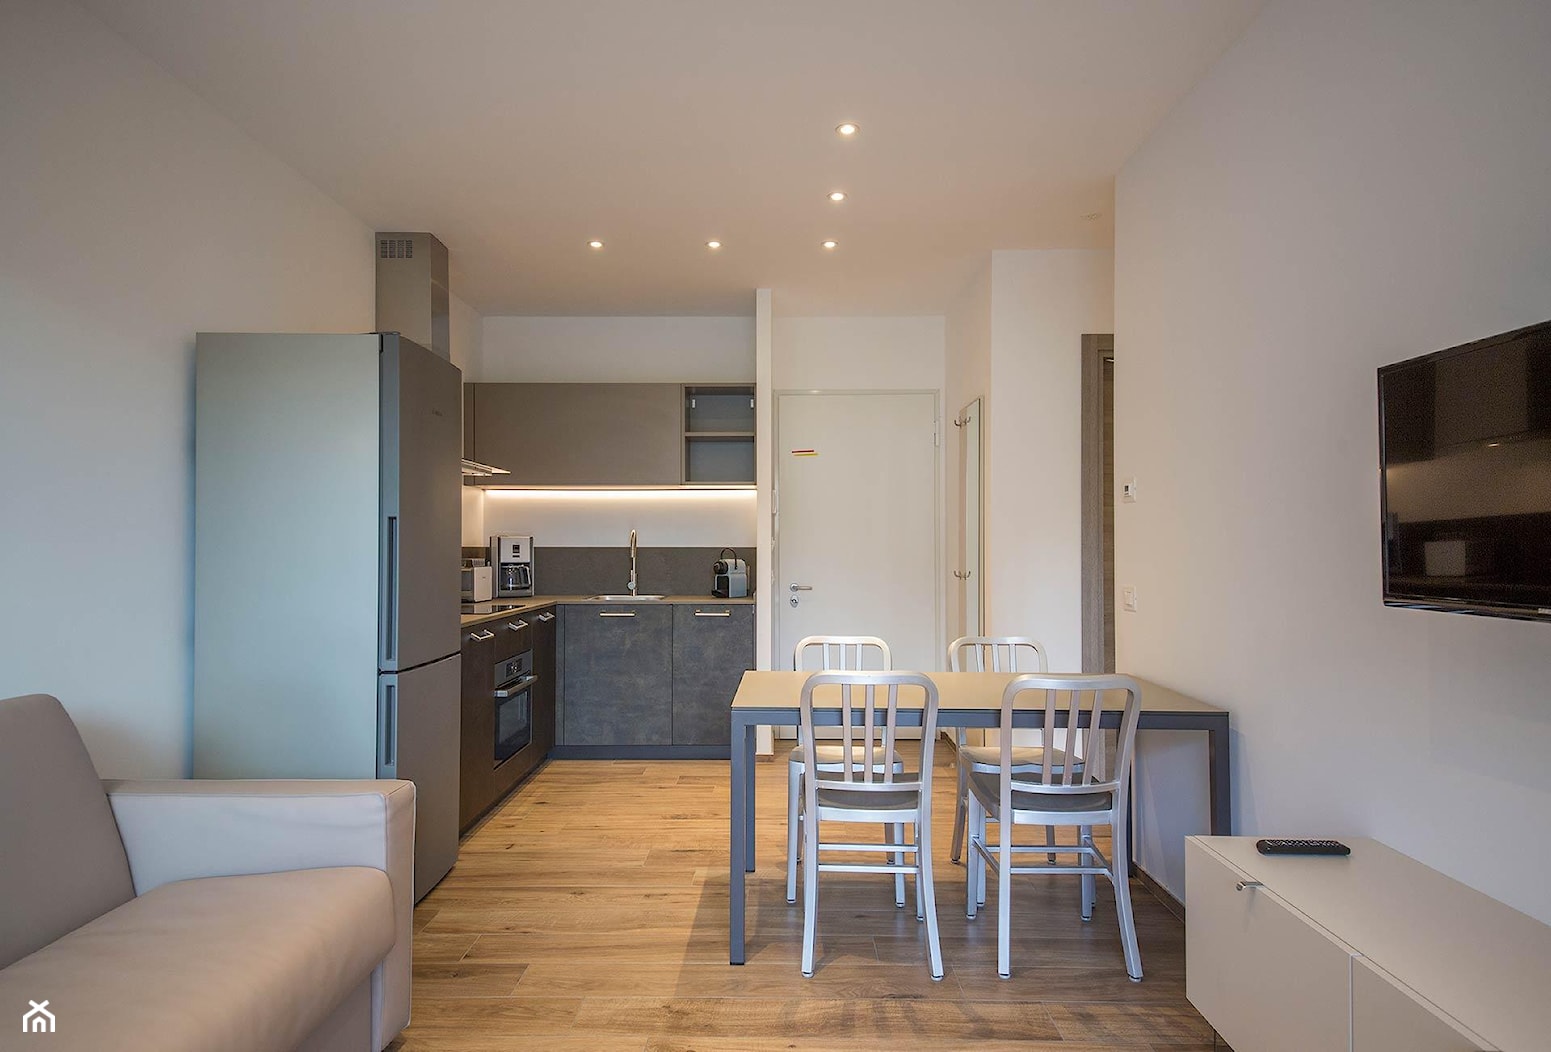 RIVA LAKE LODGE HOLIDAY APARTMENTS & ROOMS - Kuchnia, styl minimalistyczny - zdjęcie od Oskar Jursza - Homebook